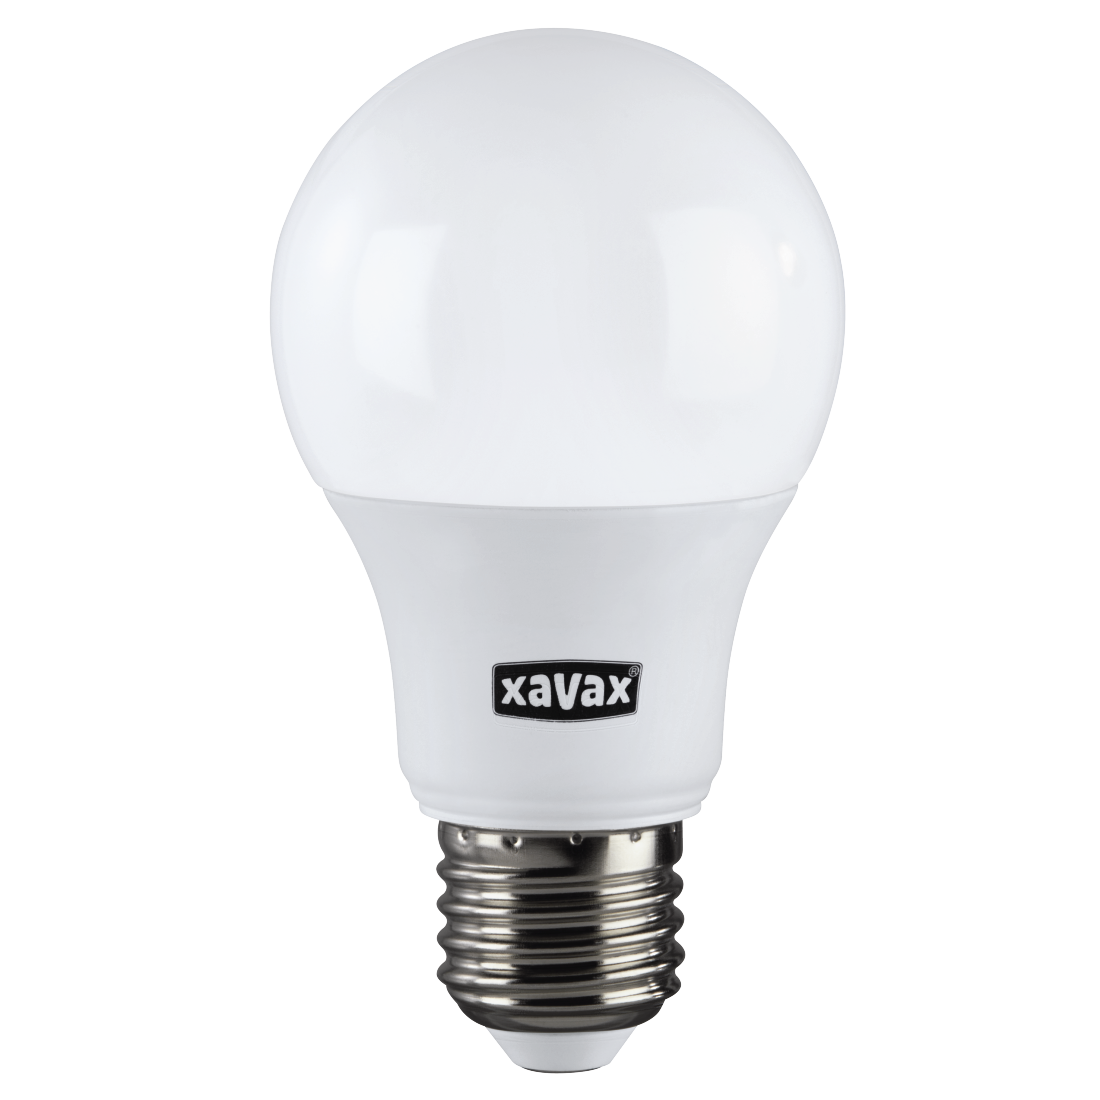 abx Druckfähige Abbildung - Xavax, LED-Lampe, E27, 806 lm ersetzt 60W, Glühlampe, Warmweiß, 3-Stufen-dimmbar